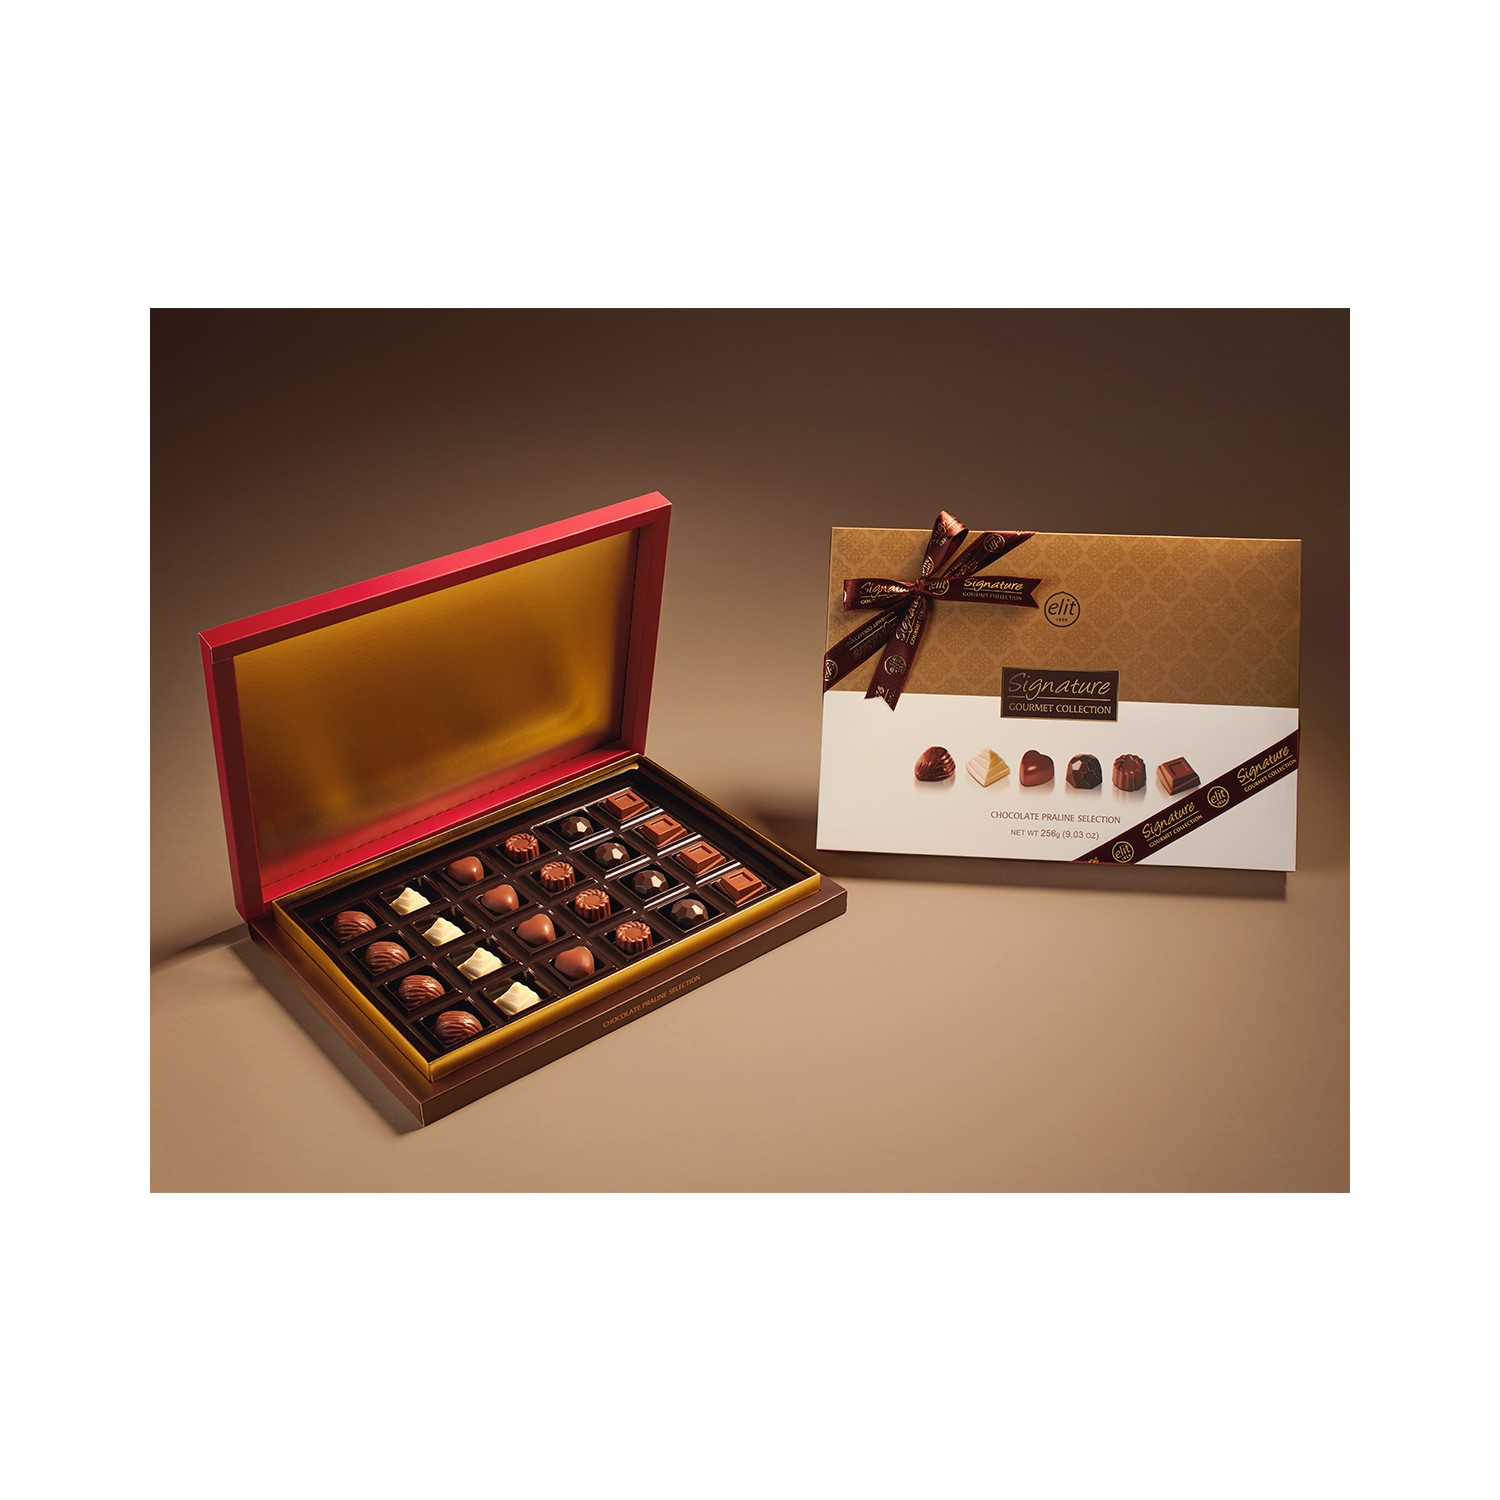 Elit Çikolata Signature Spesiyal Çikolata Beyaz Kutu 256g Fiyatı